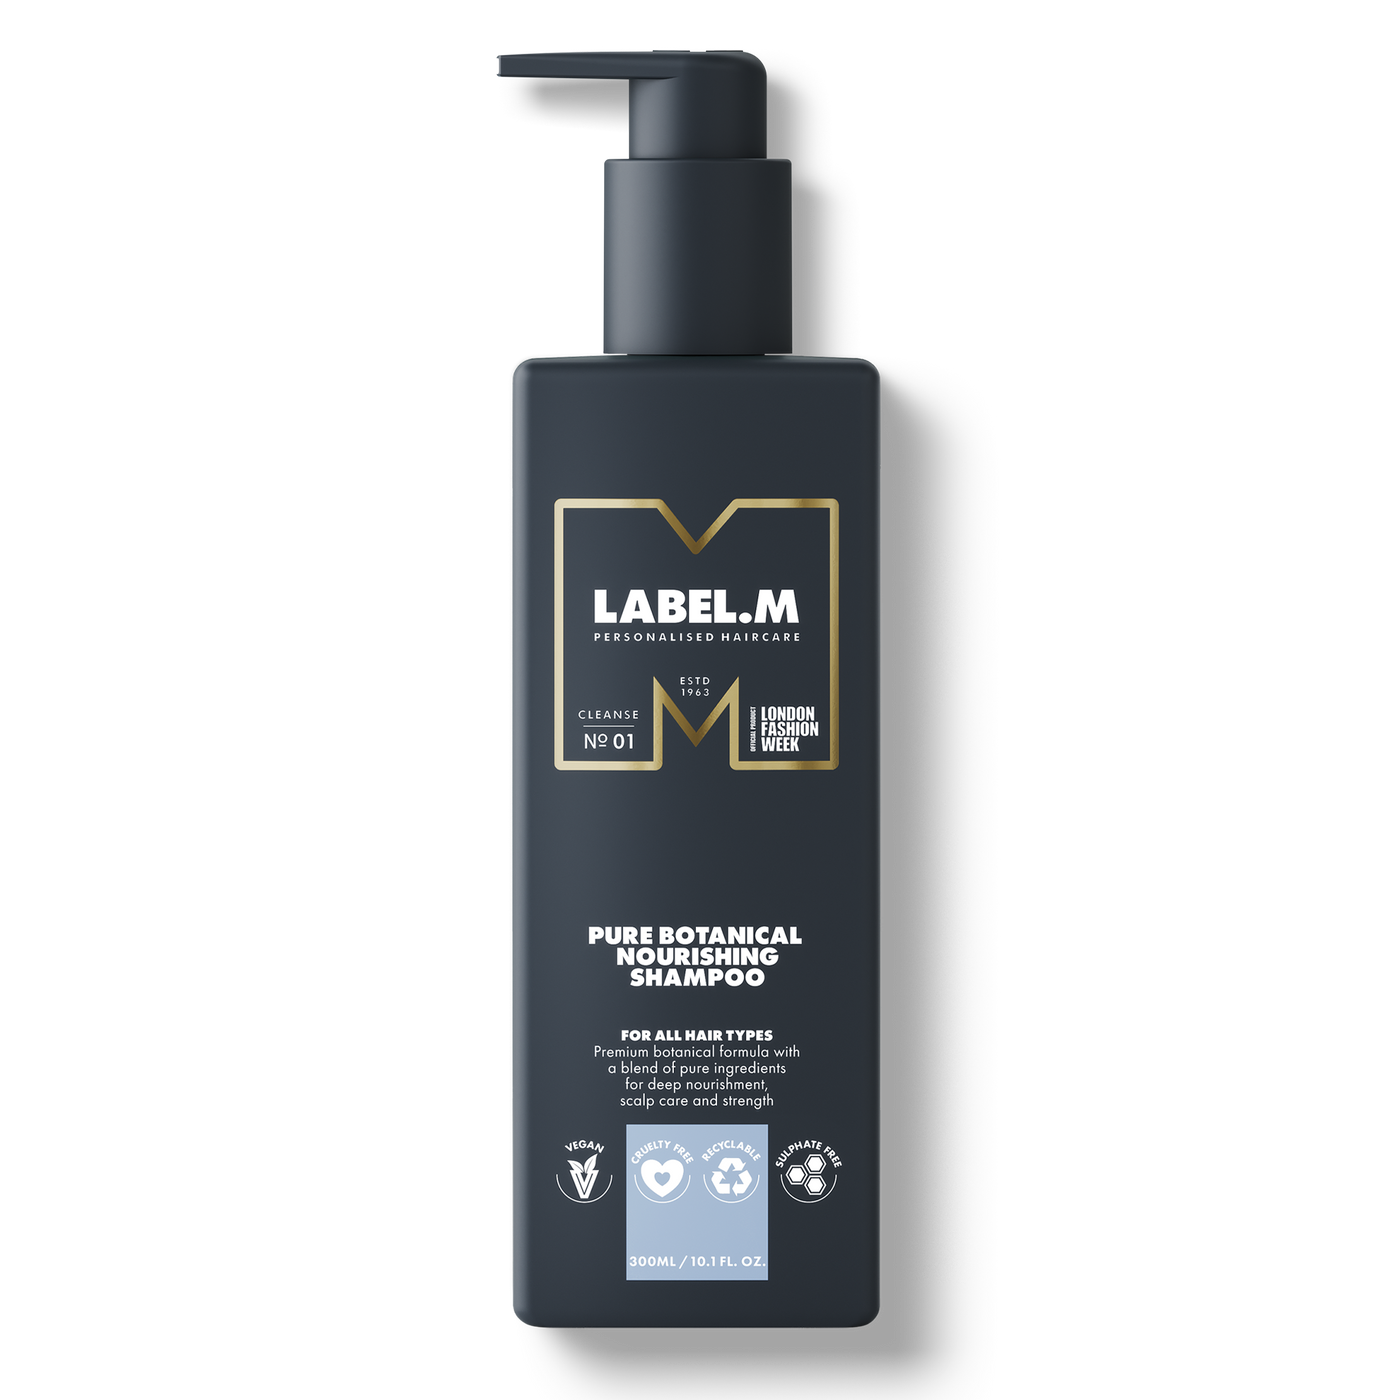 LABEL.M Pure Botanical Nourishing Shampoo - 300ml